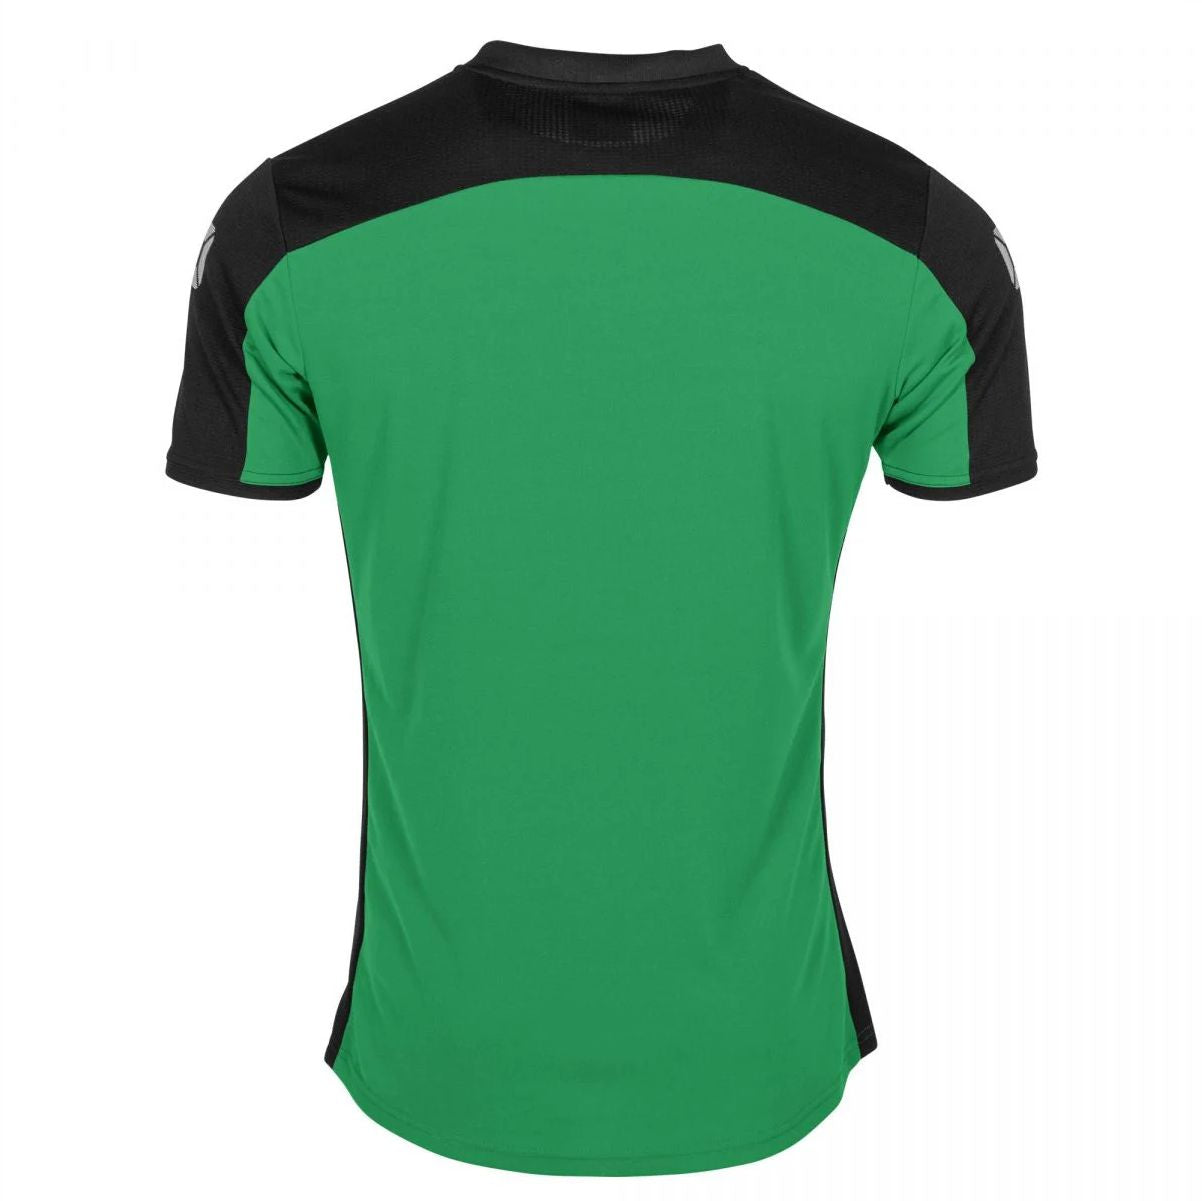 Stanno - Pride Shirt - Green & Black